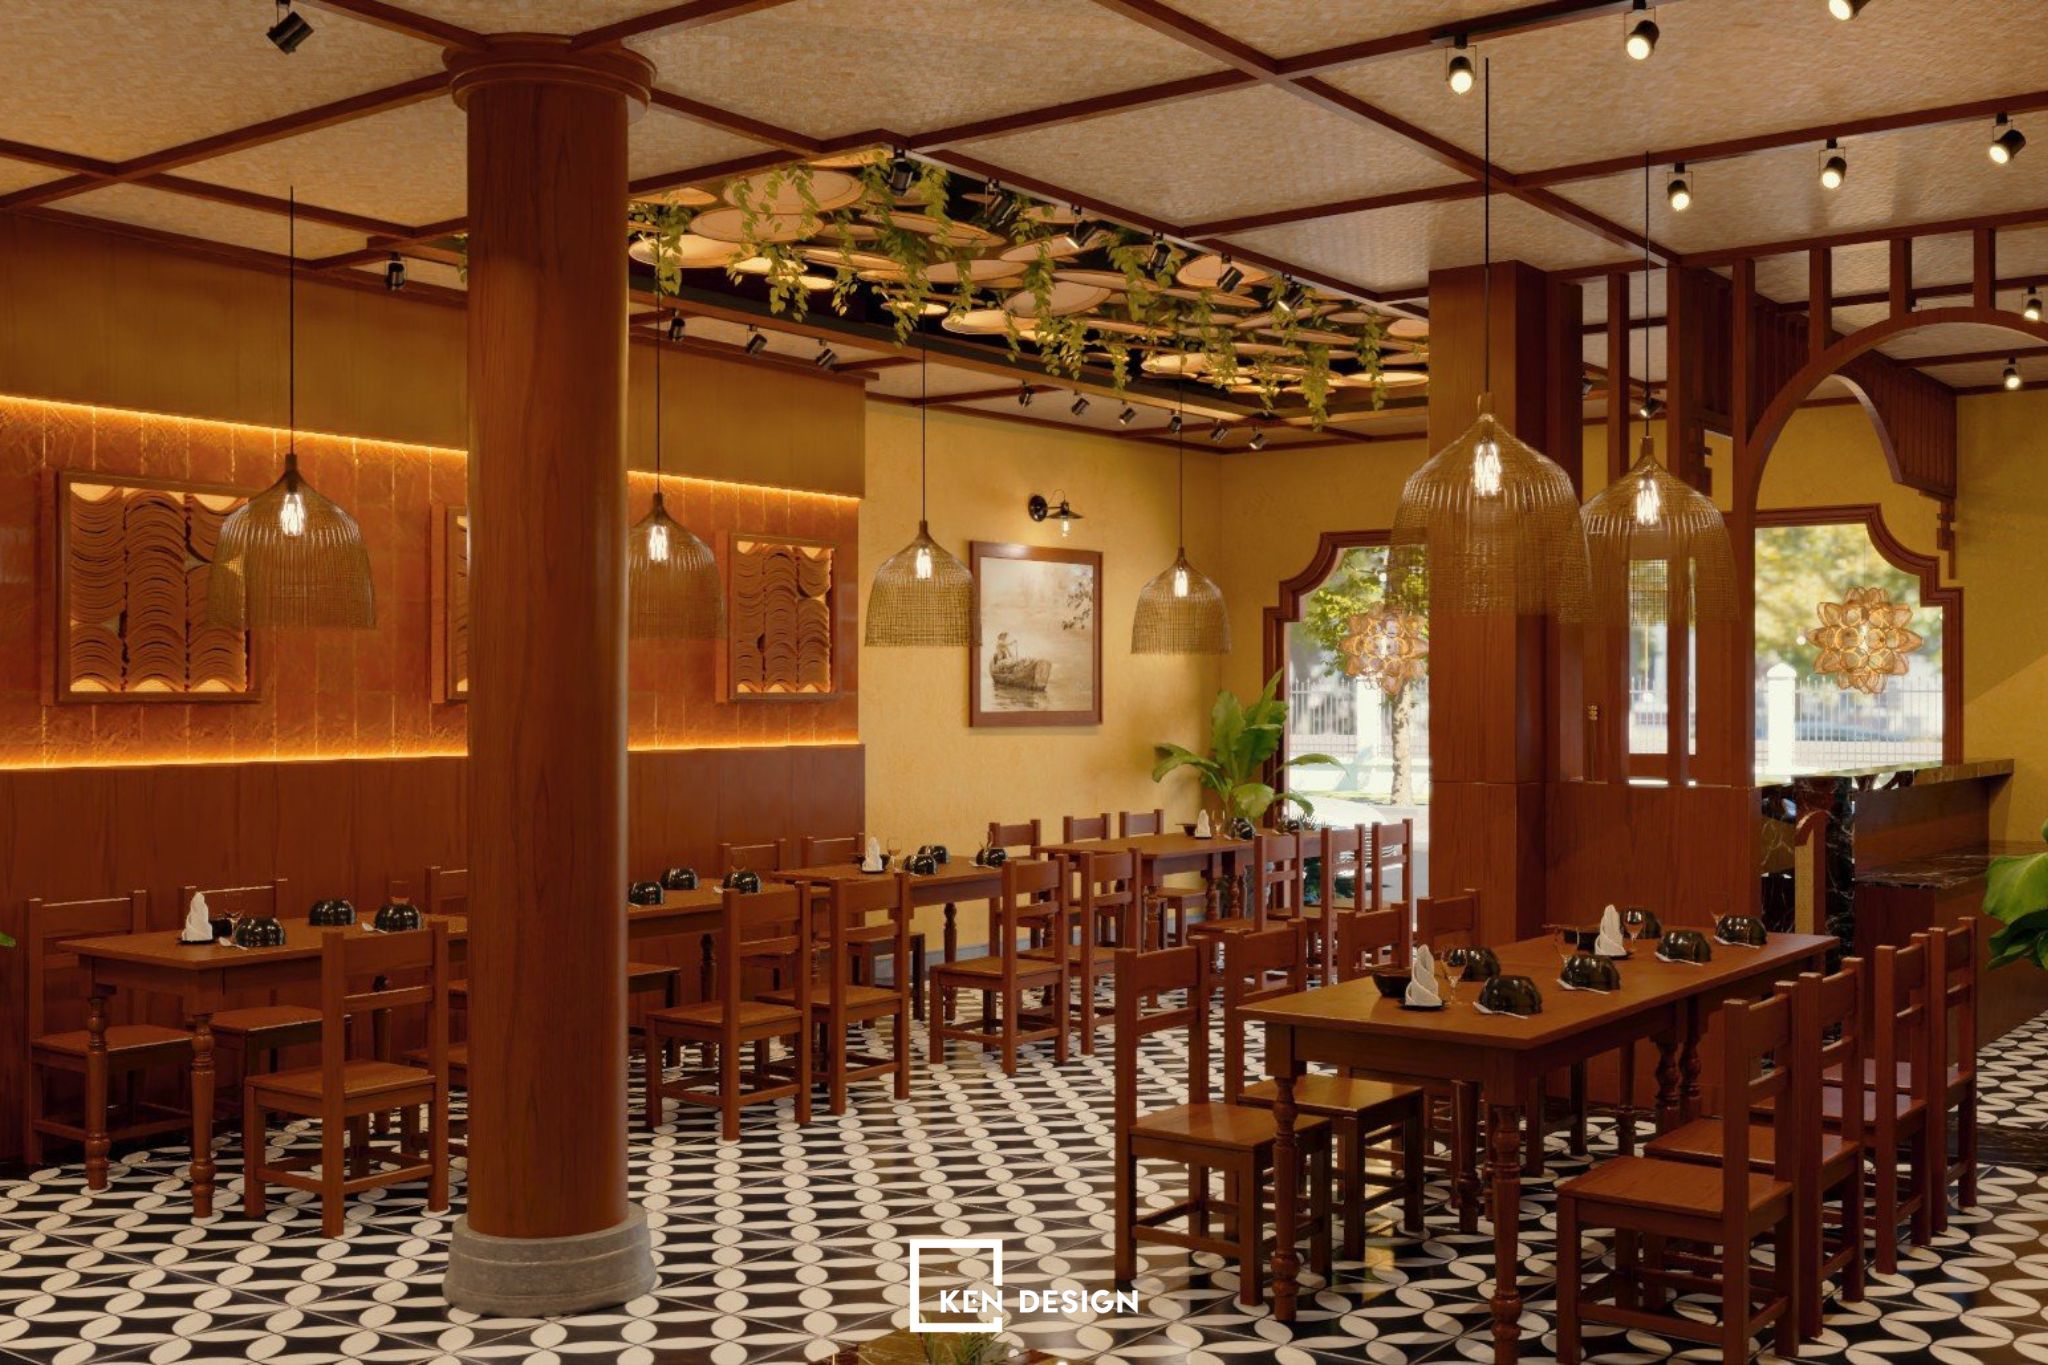 The Design of Hai Mien Tay Restaurant - Trung Hoa